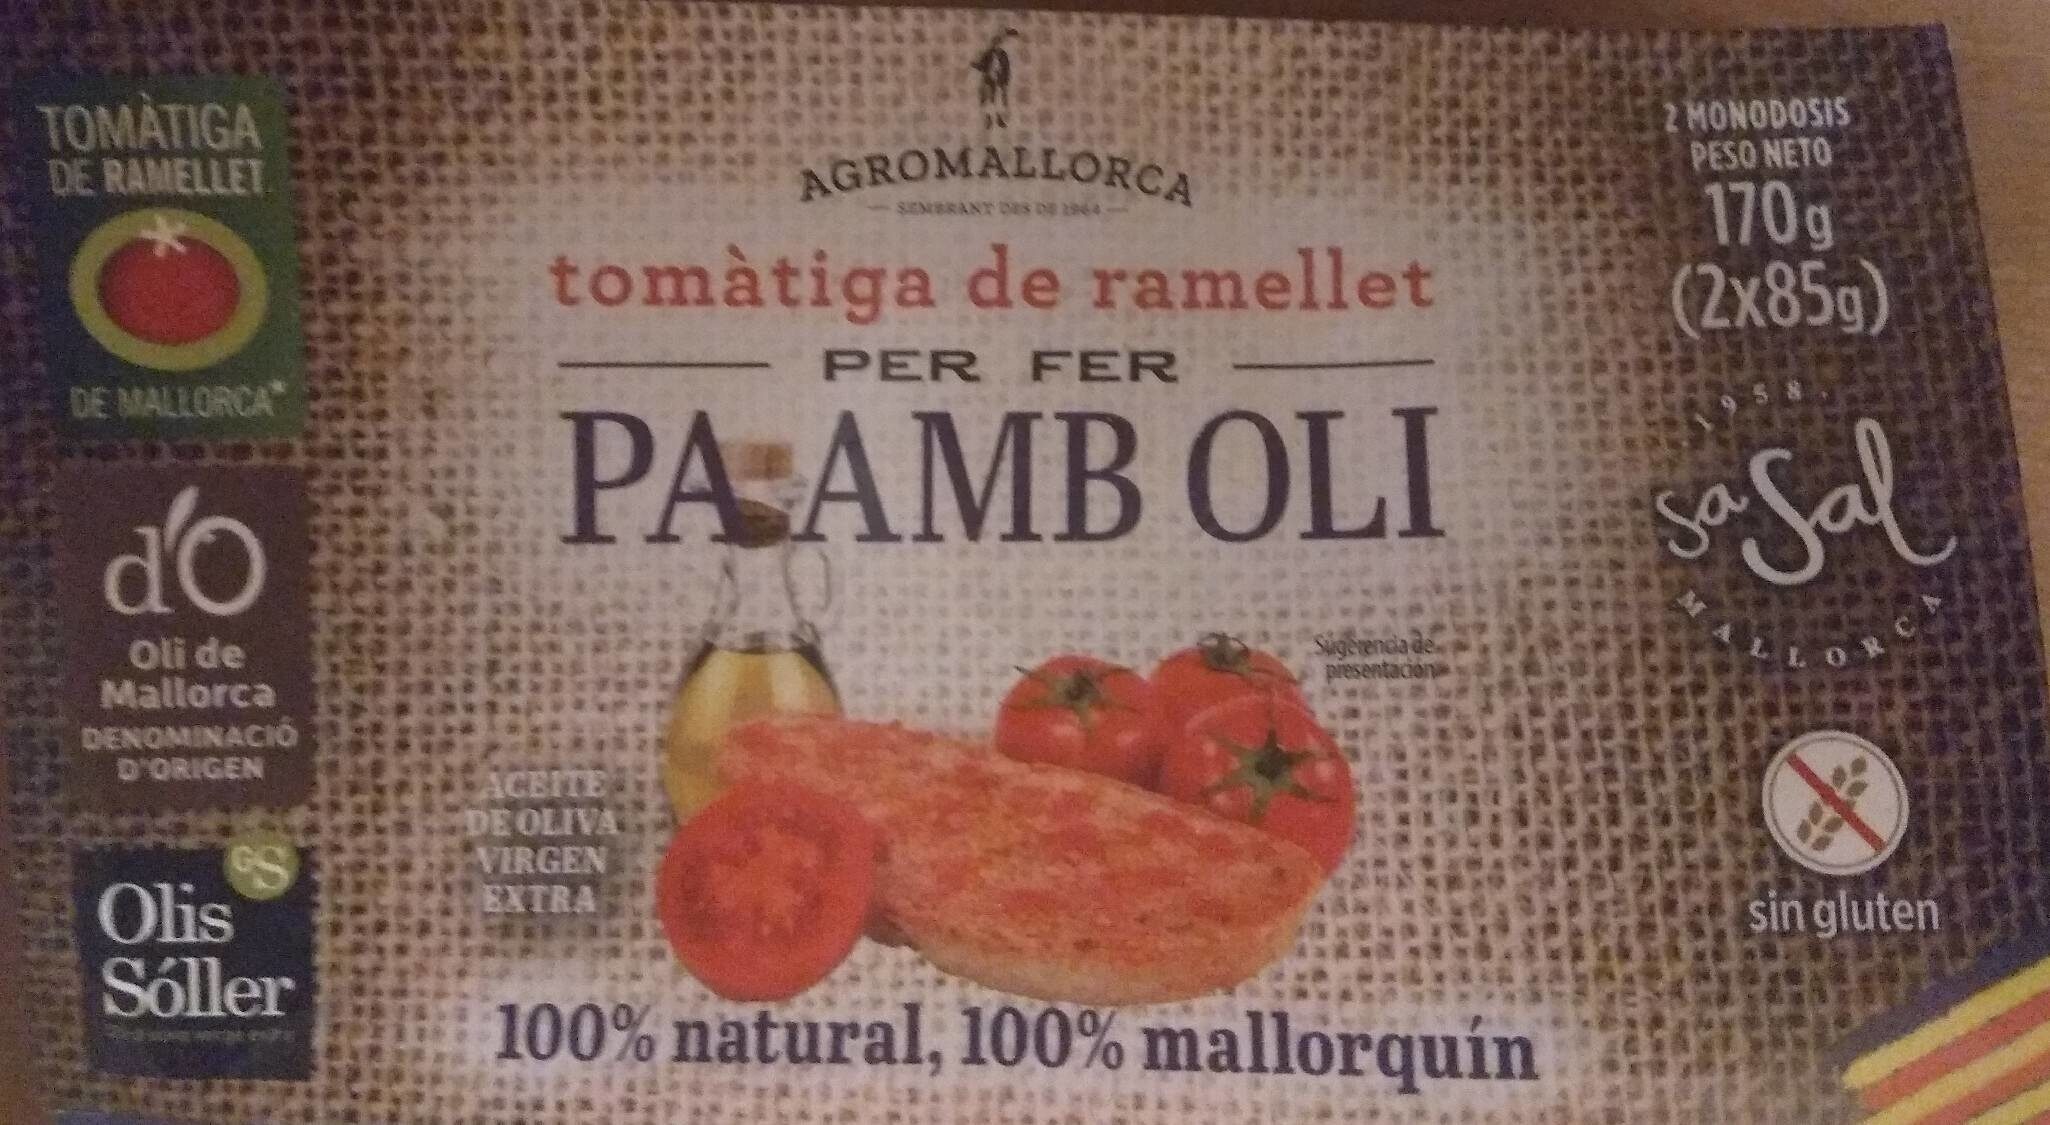 PA AMB OLI - Producte - fr